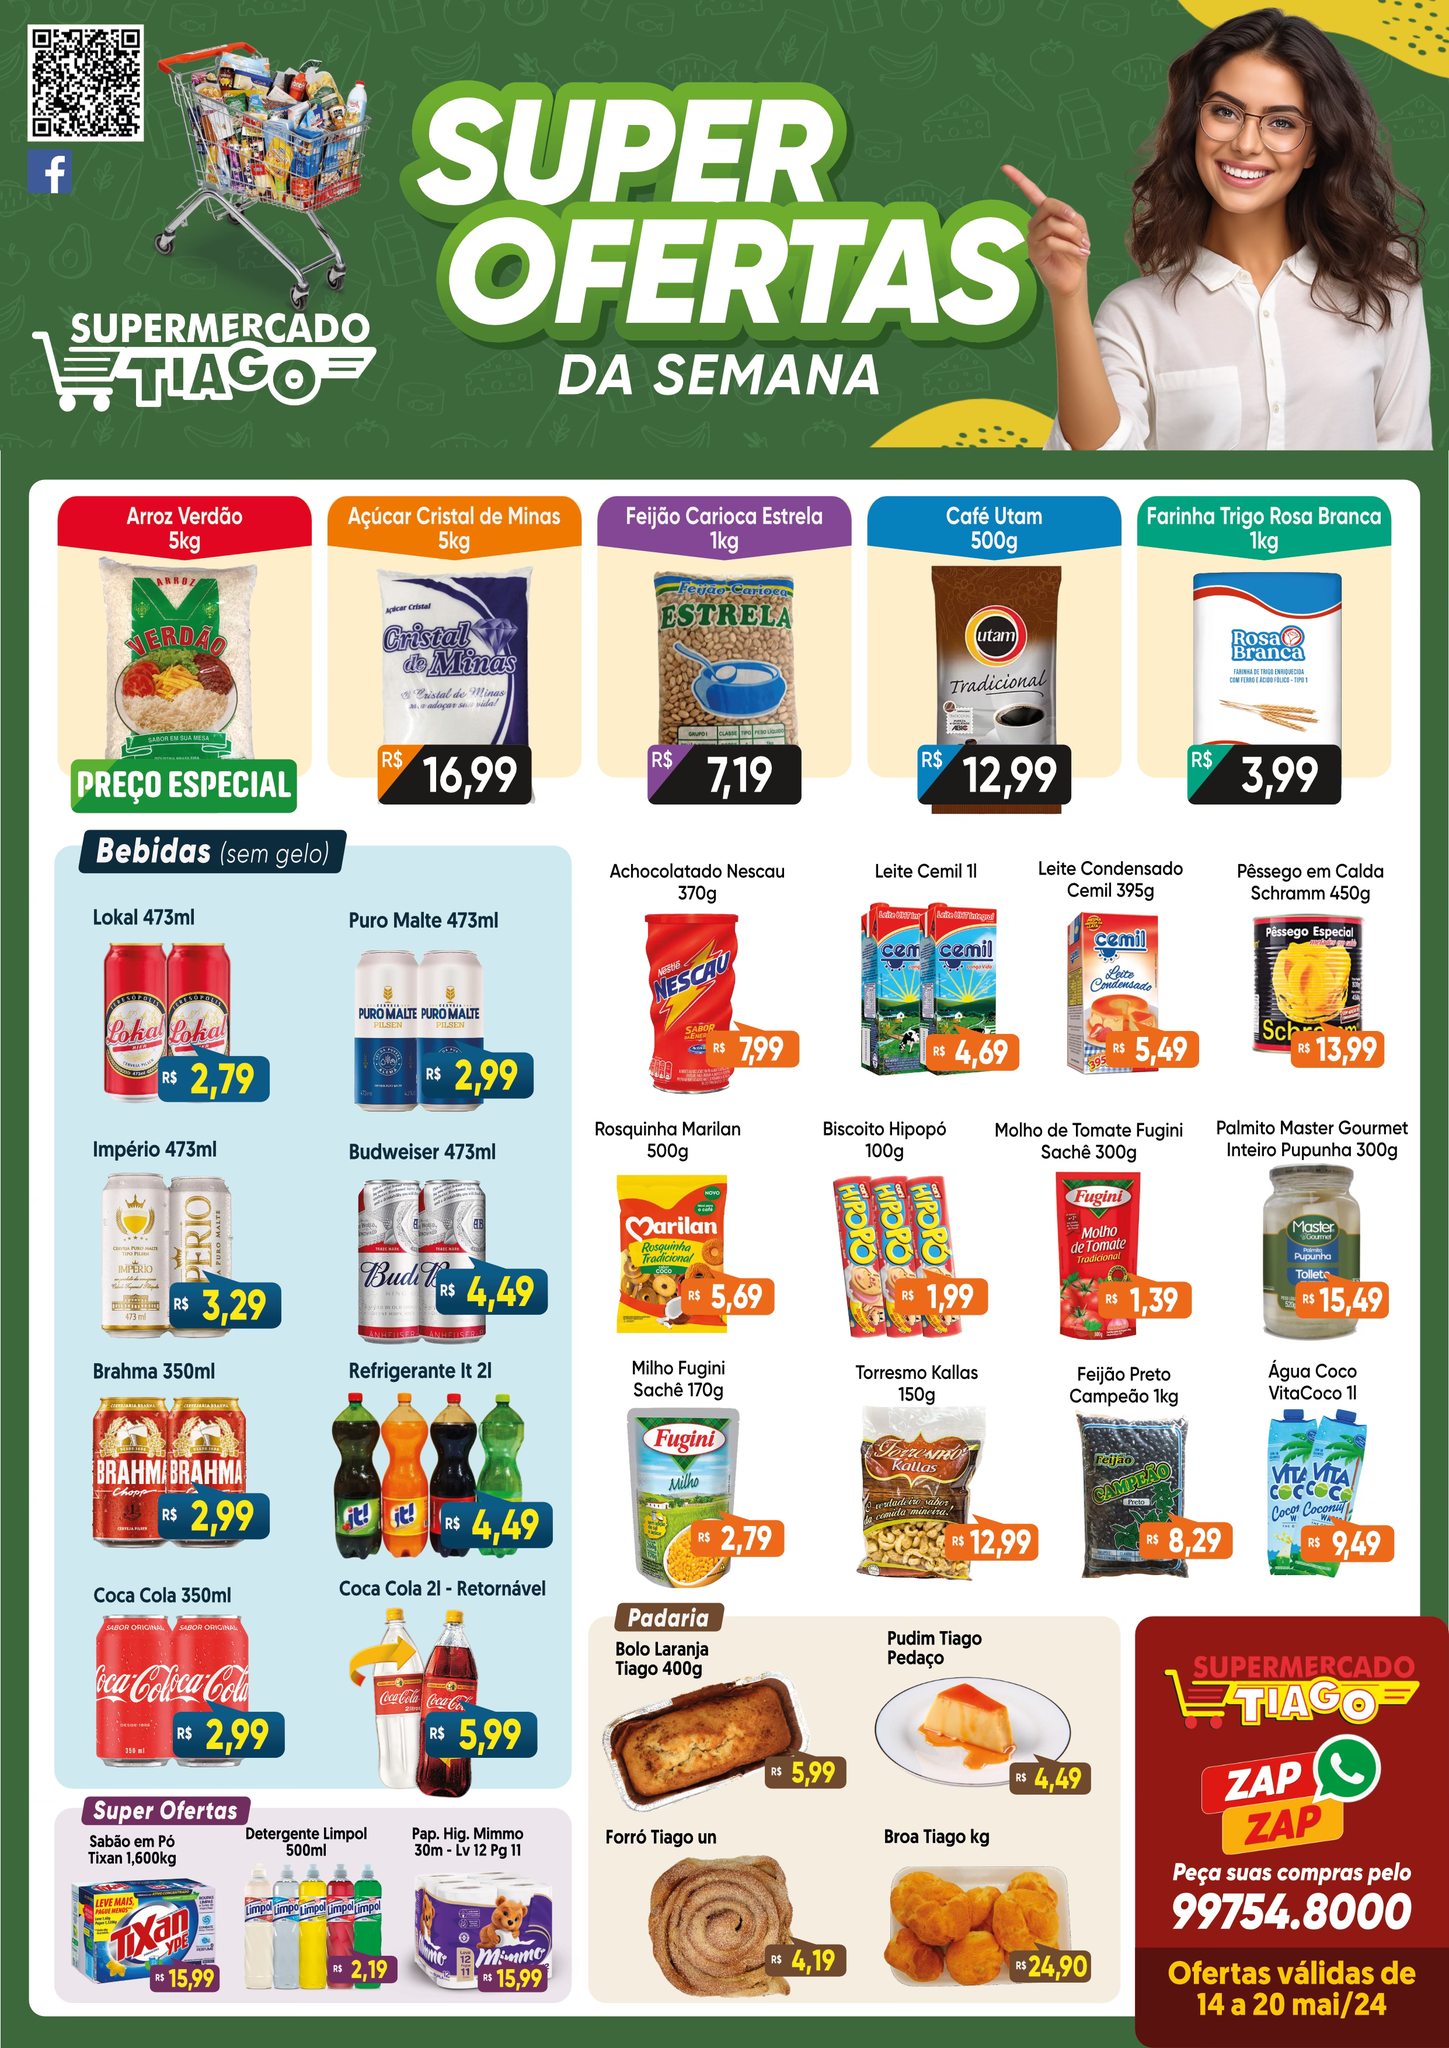  Supermercado Tiago - Ofertas da Semana Supermercados Passos MG / Jornal de Ofertas Supermercados